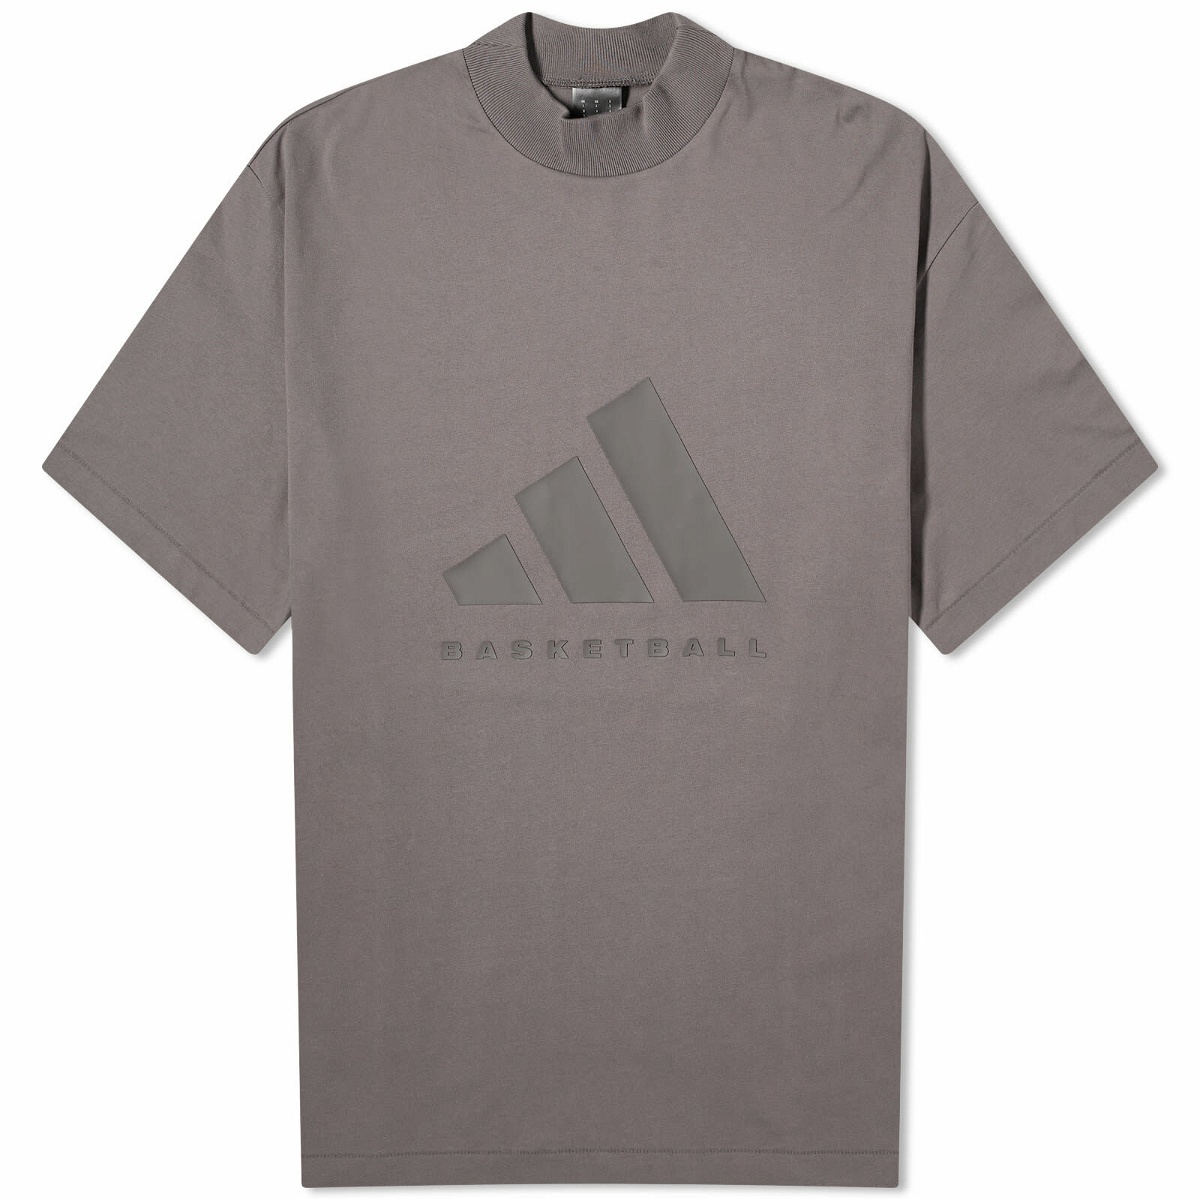 Adidas Climalite Ultimate Tee V-Neck T-Shirt S  Adidas shirt, Short sleeve  tee shirts, Grey polo shirt